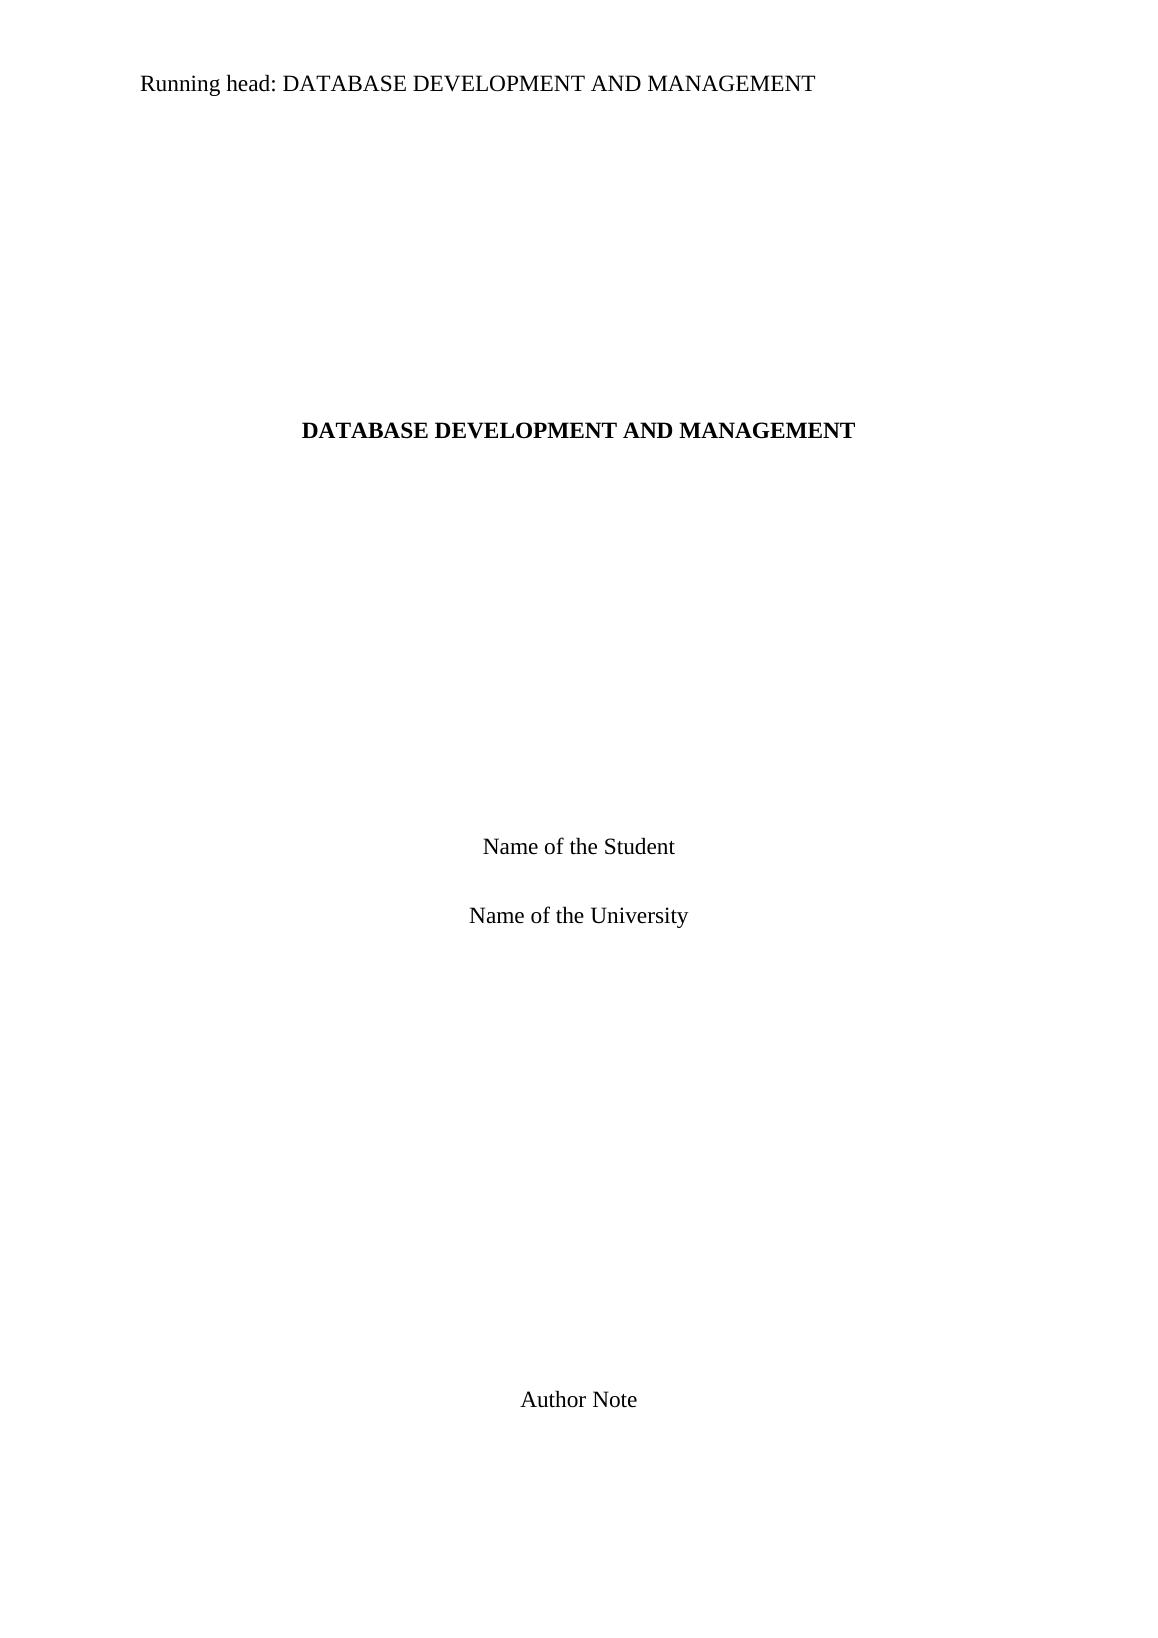 Database Development and Management - SQL_1